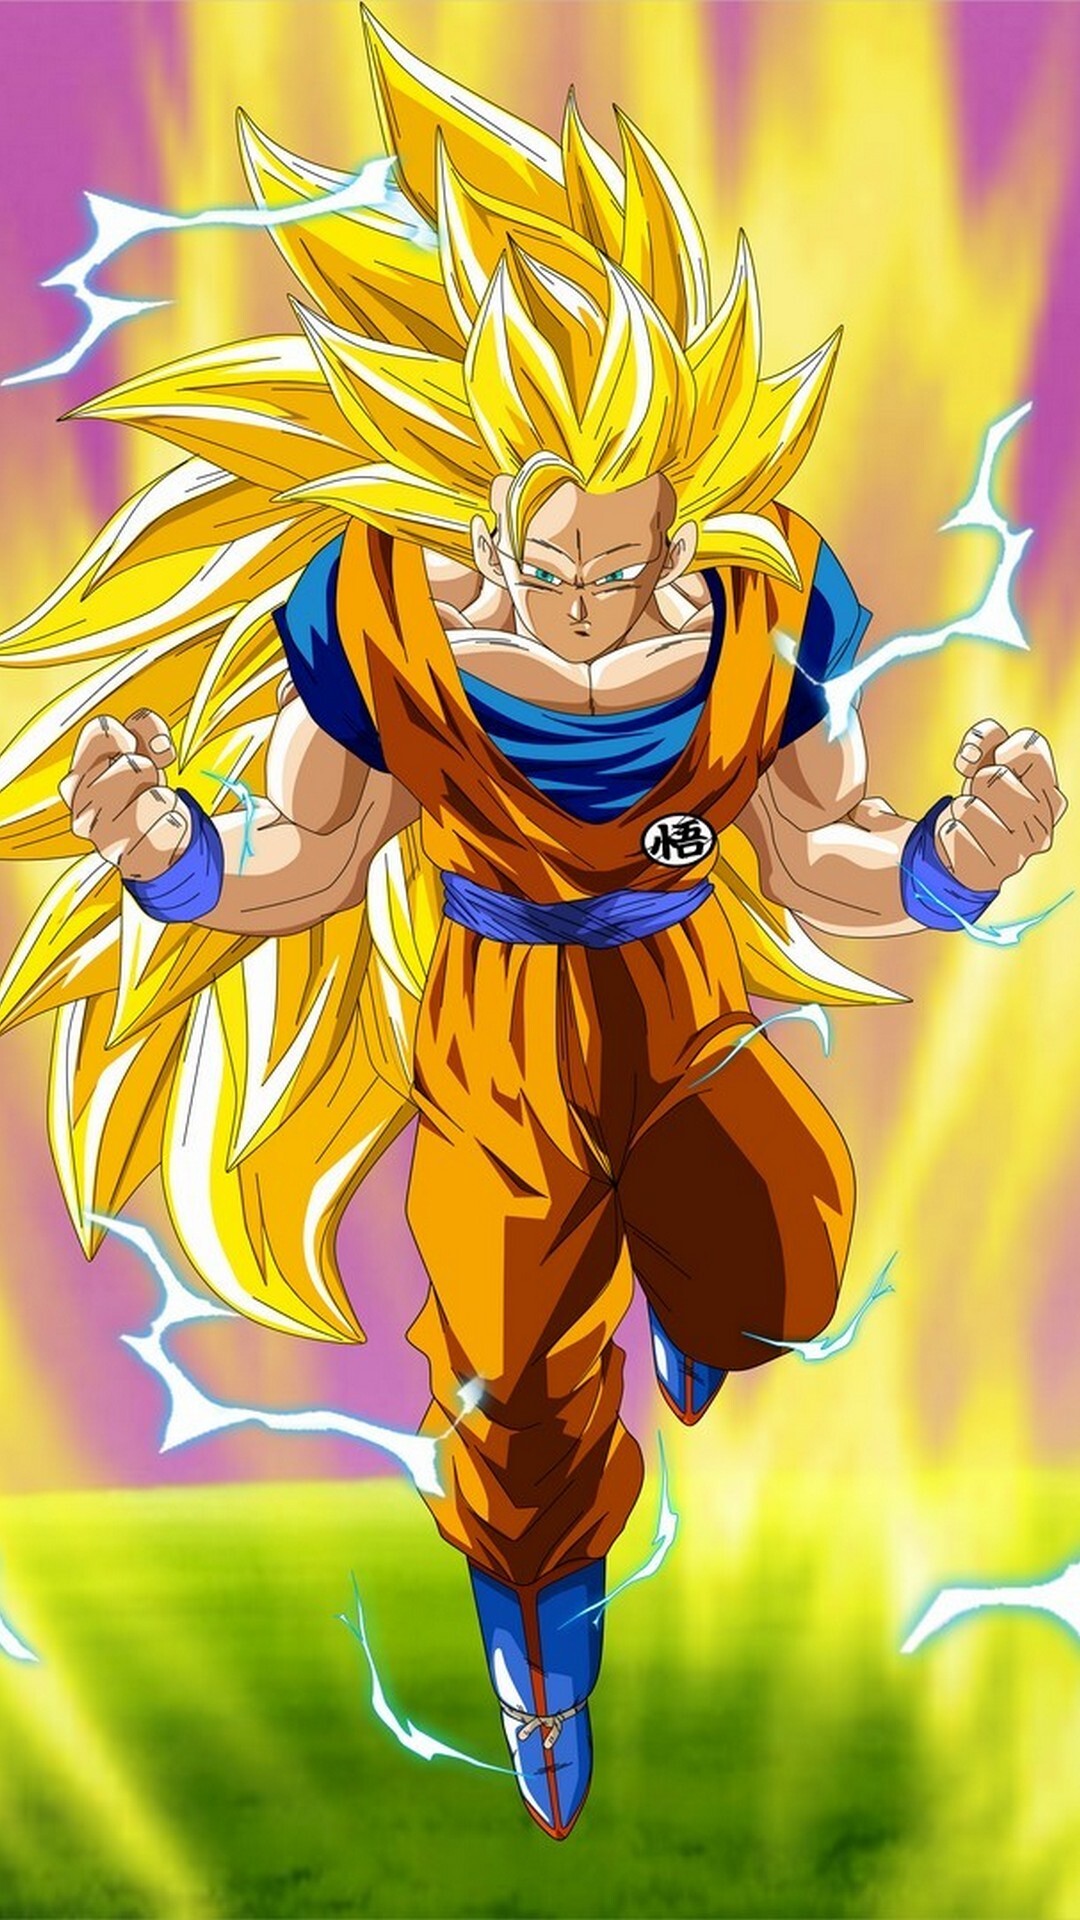 Goku Super Saiyan: SSJ3, The third form of transformation, Long golden hair, The eyes regaining their pupils. 1080x1920 Full HD Wallpaper.